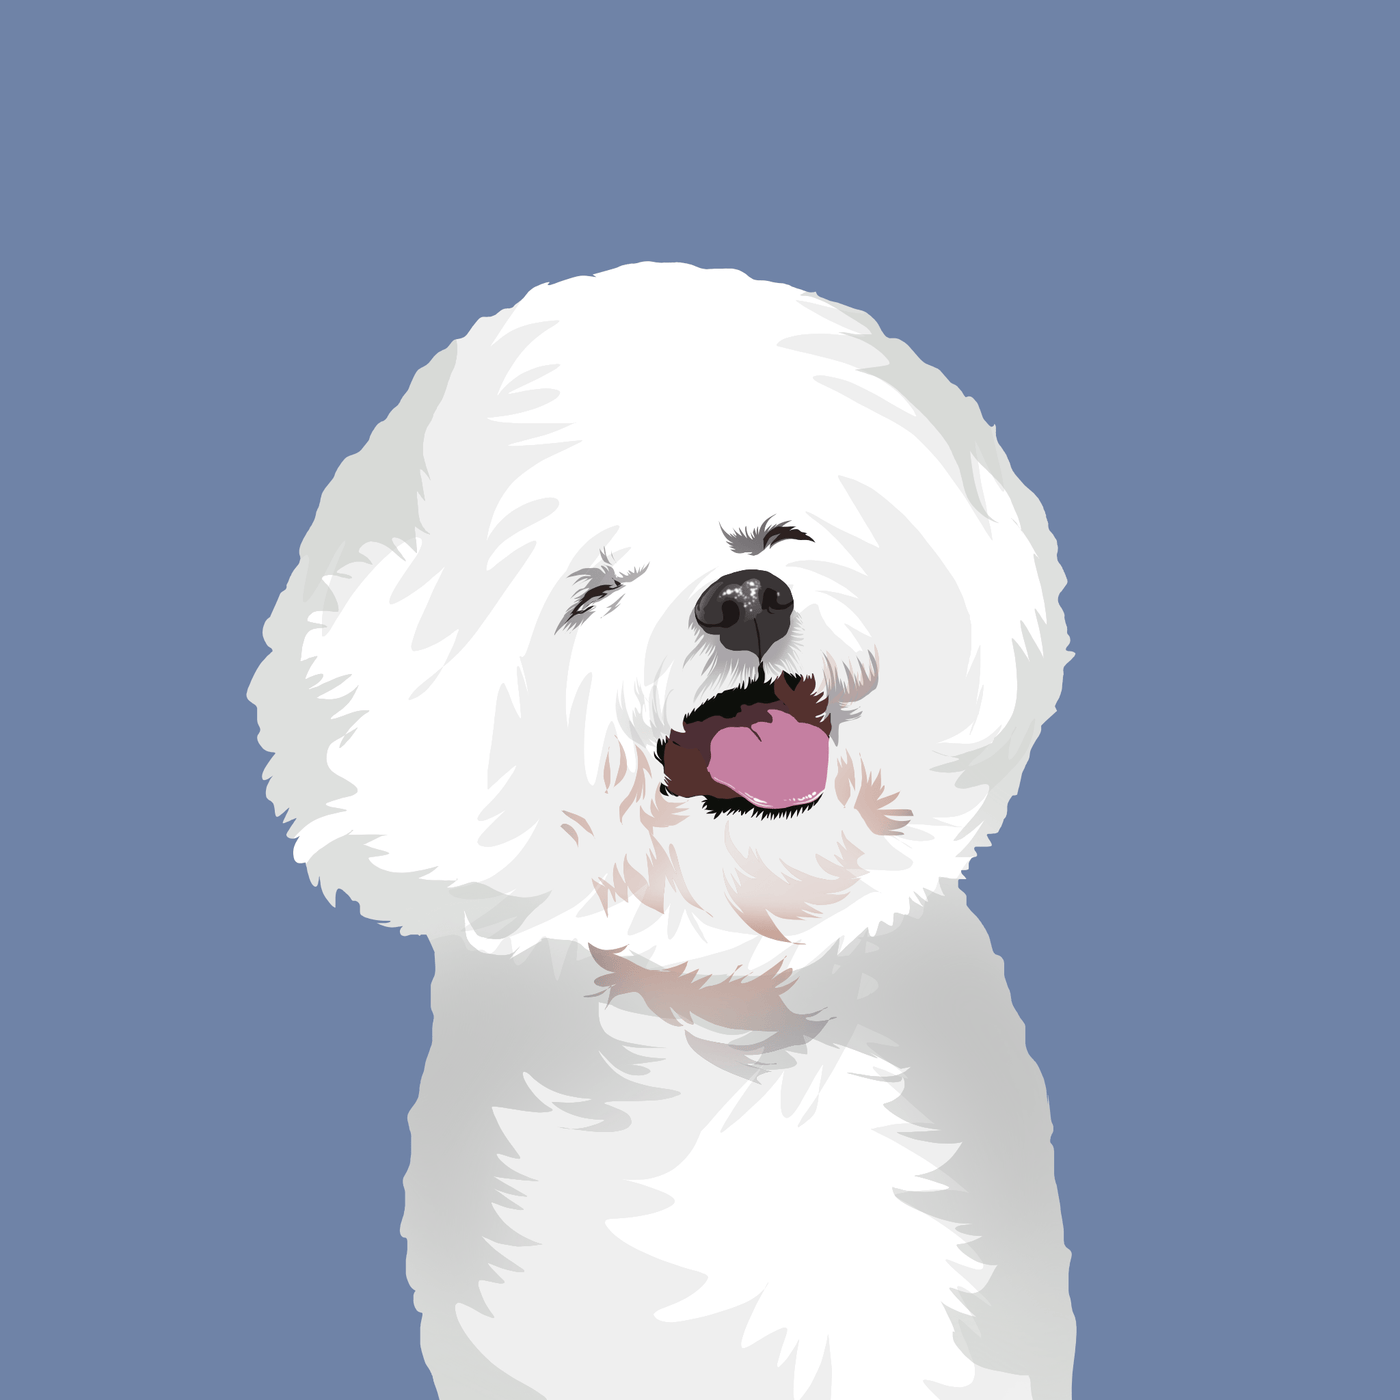 dog vector art of an adorable furry white puppy